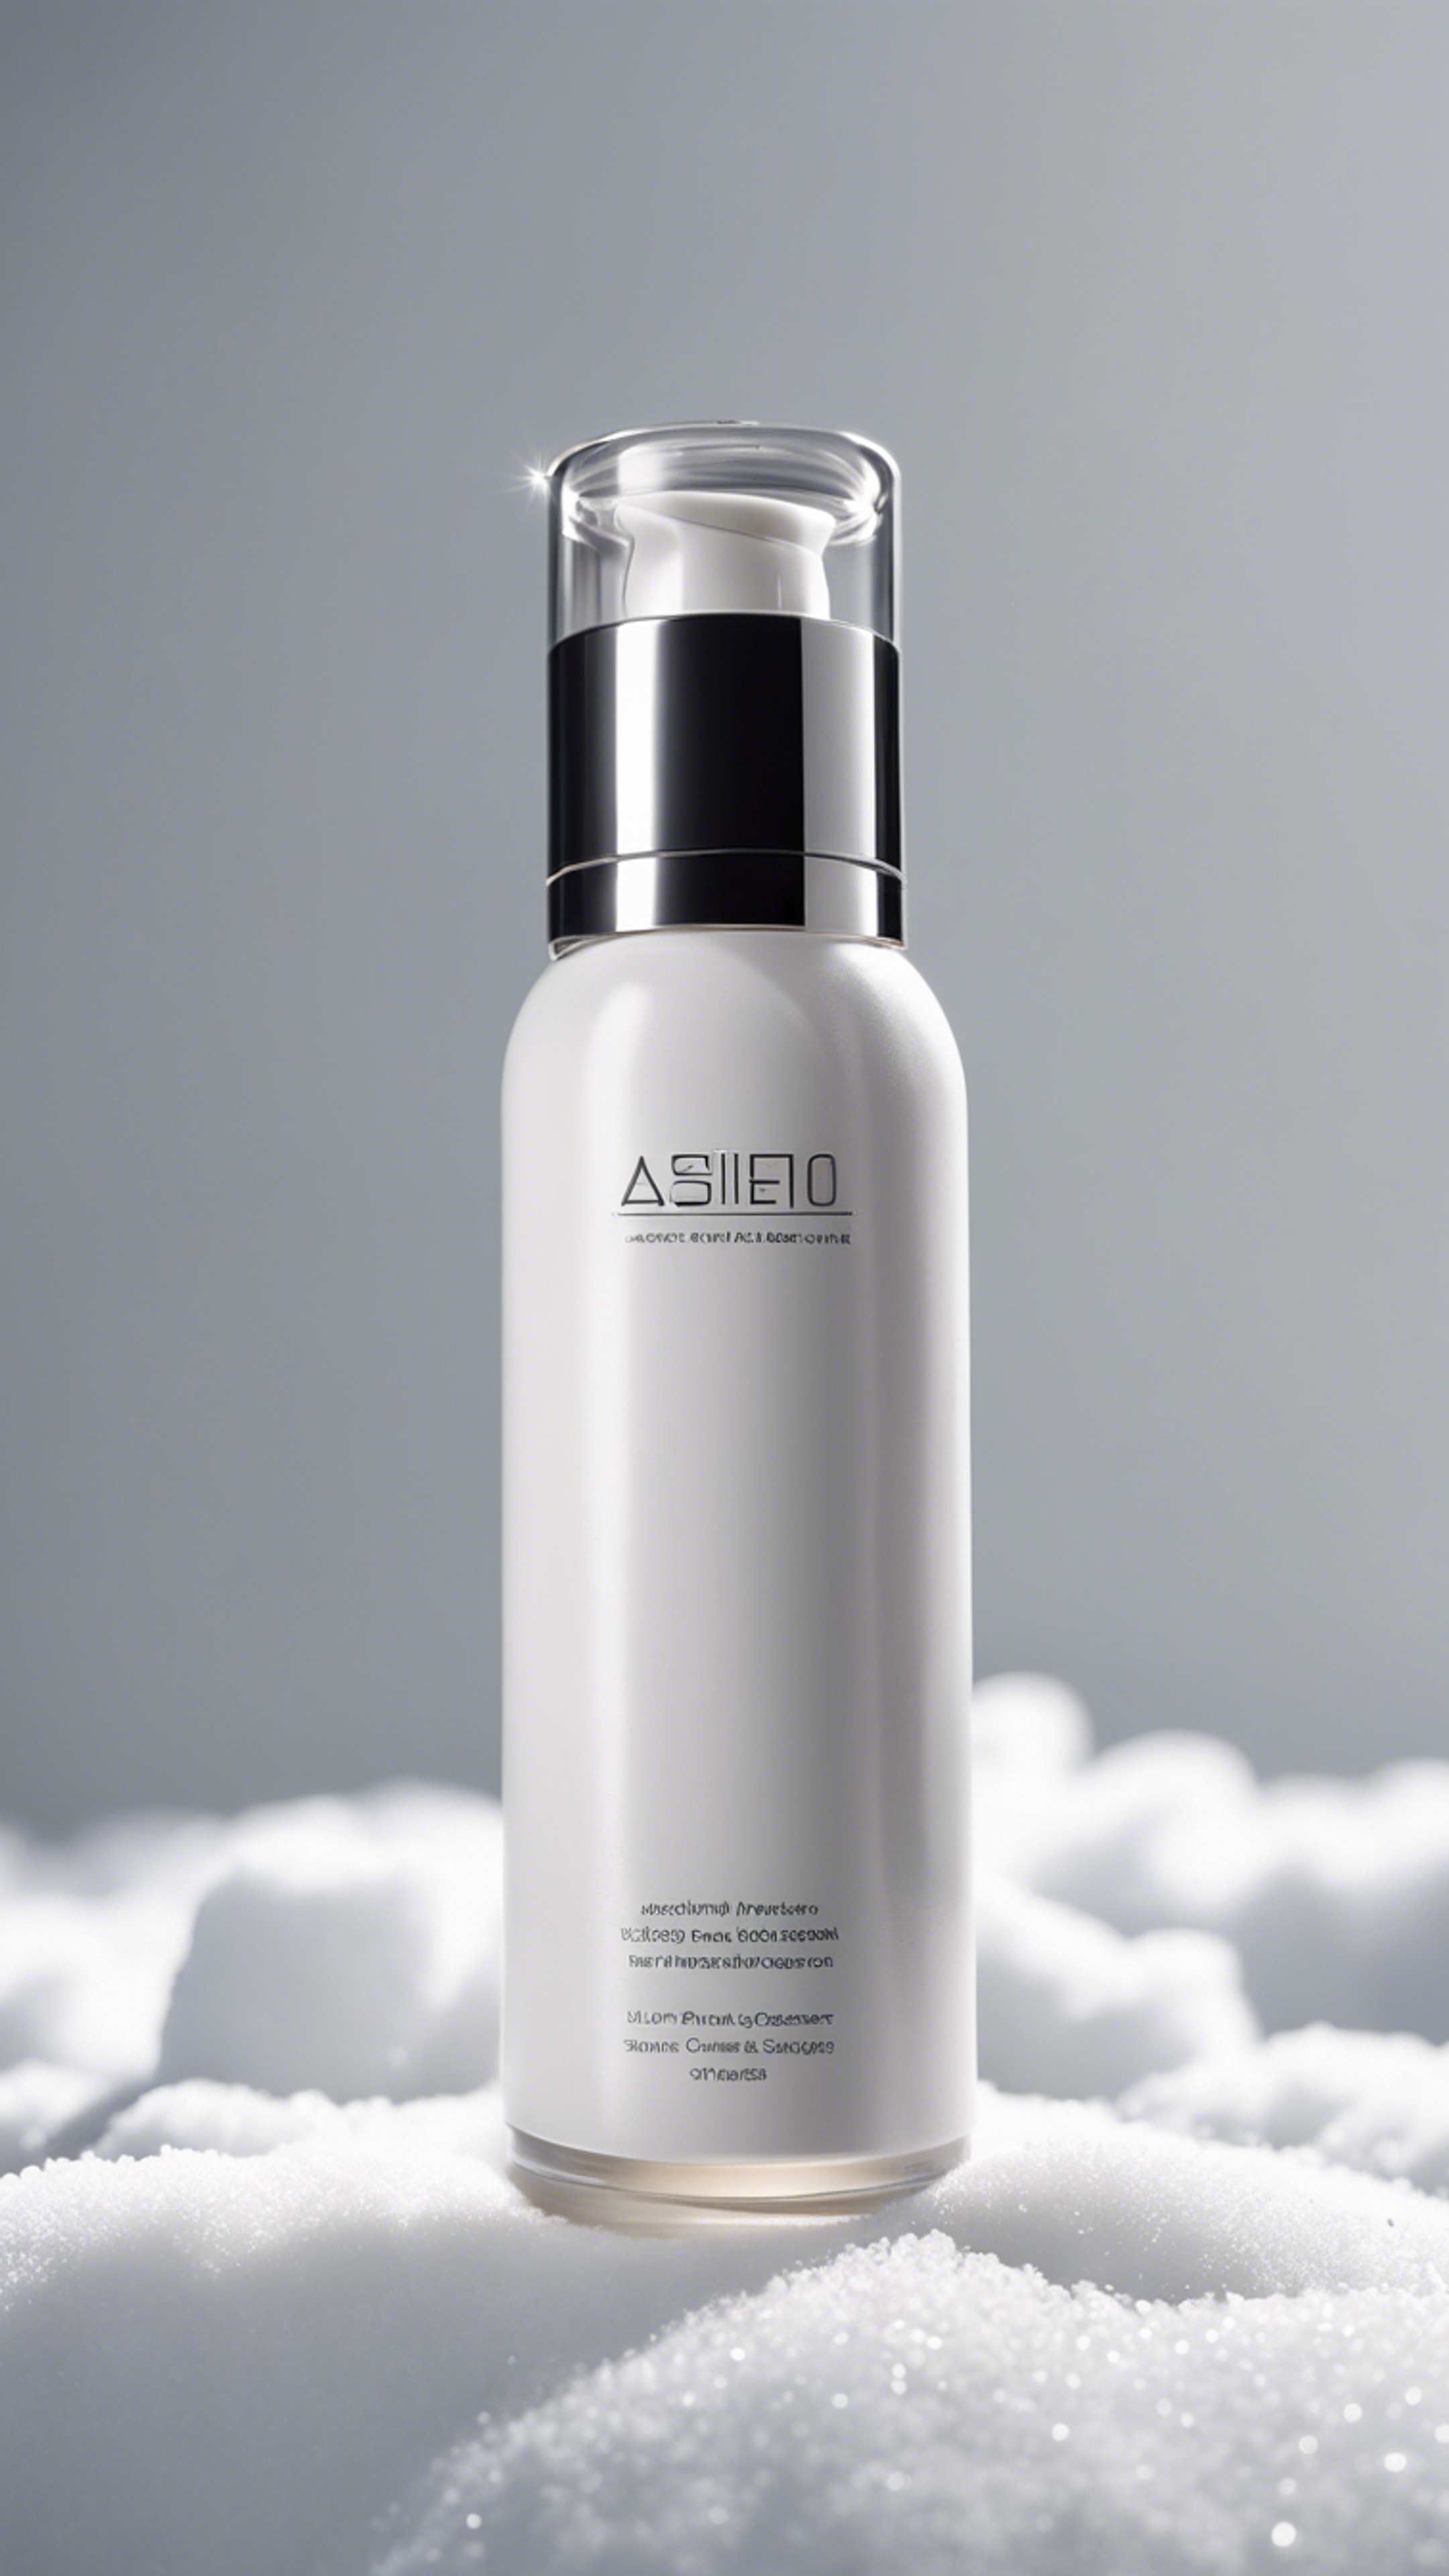 An ultra-modern minimalist skincare bottle standing against a snowy white background. Шпалери[b1a5dfd34b8b4ed6bae8]